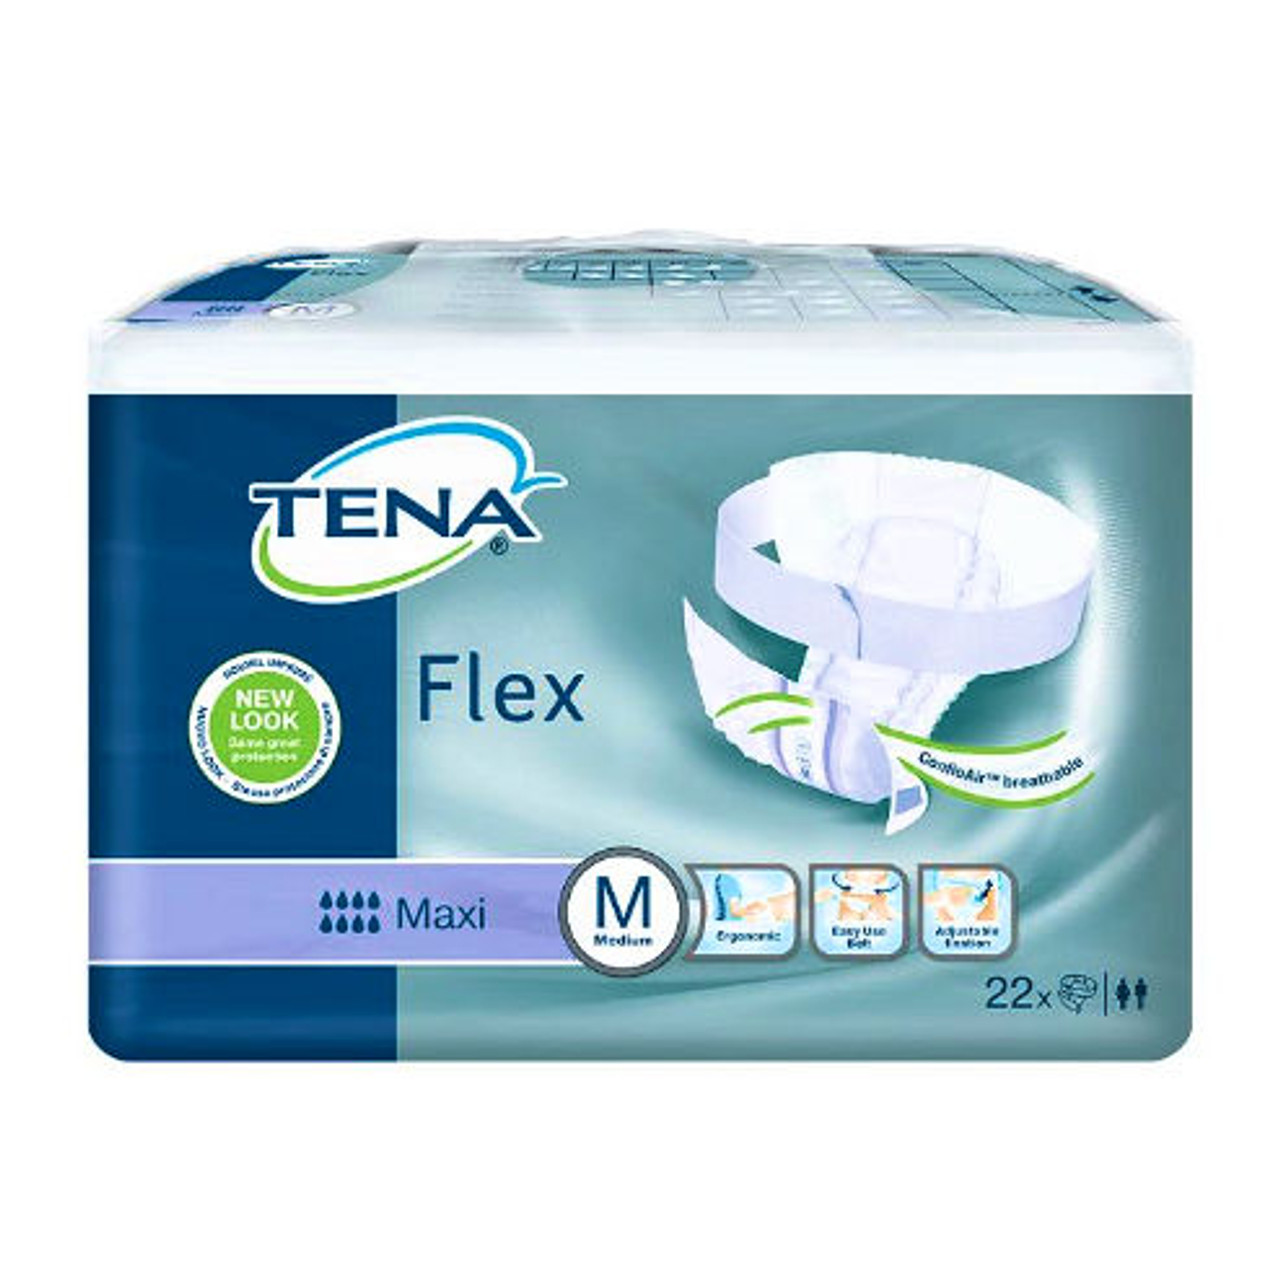 TENA Flex Maxi Breathable - M Medium ( Pack x 22 )